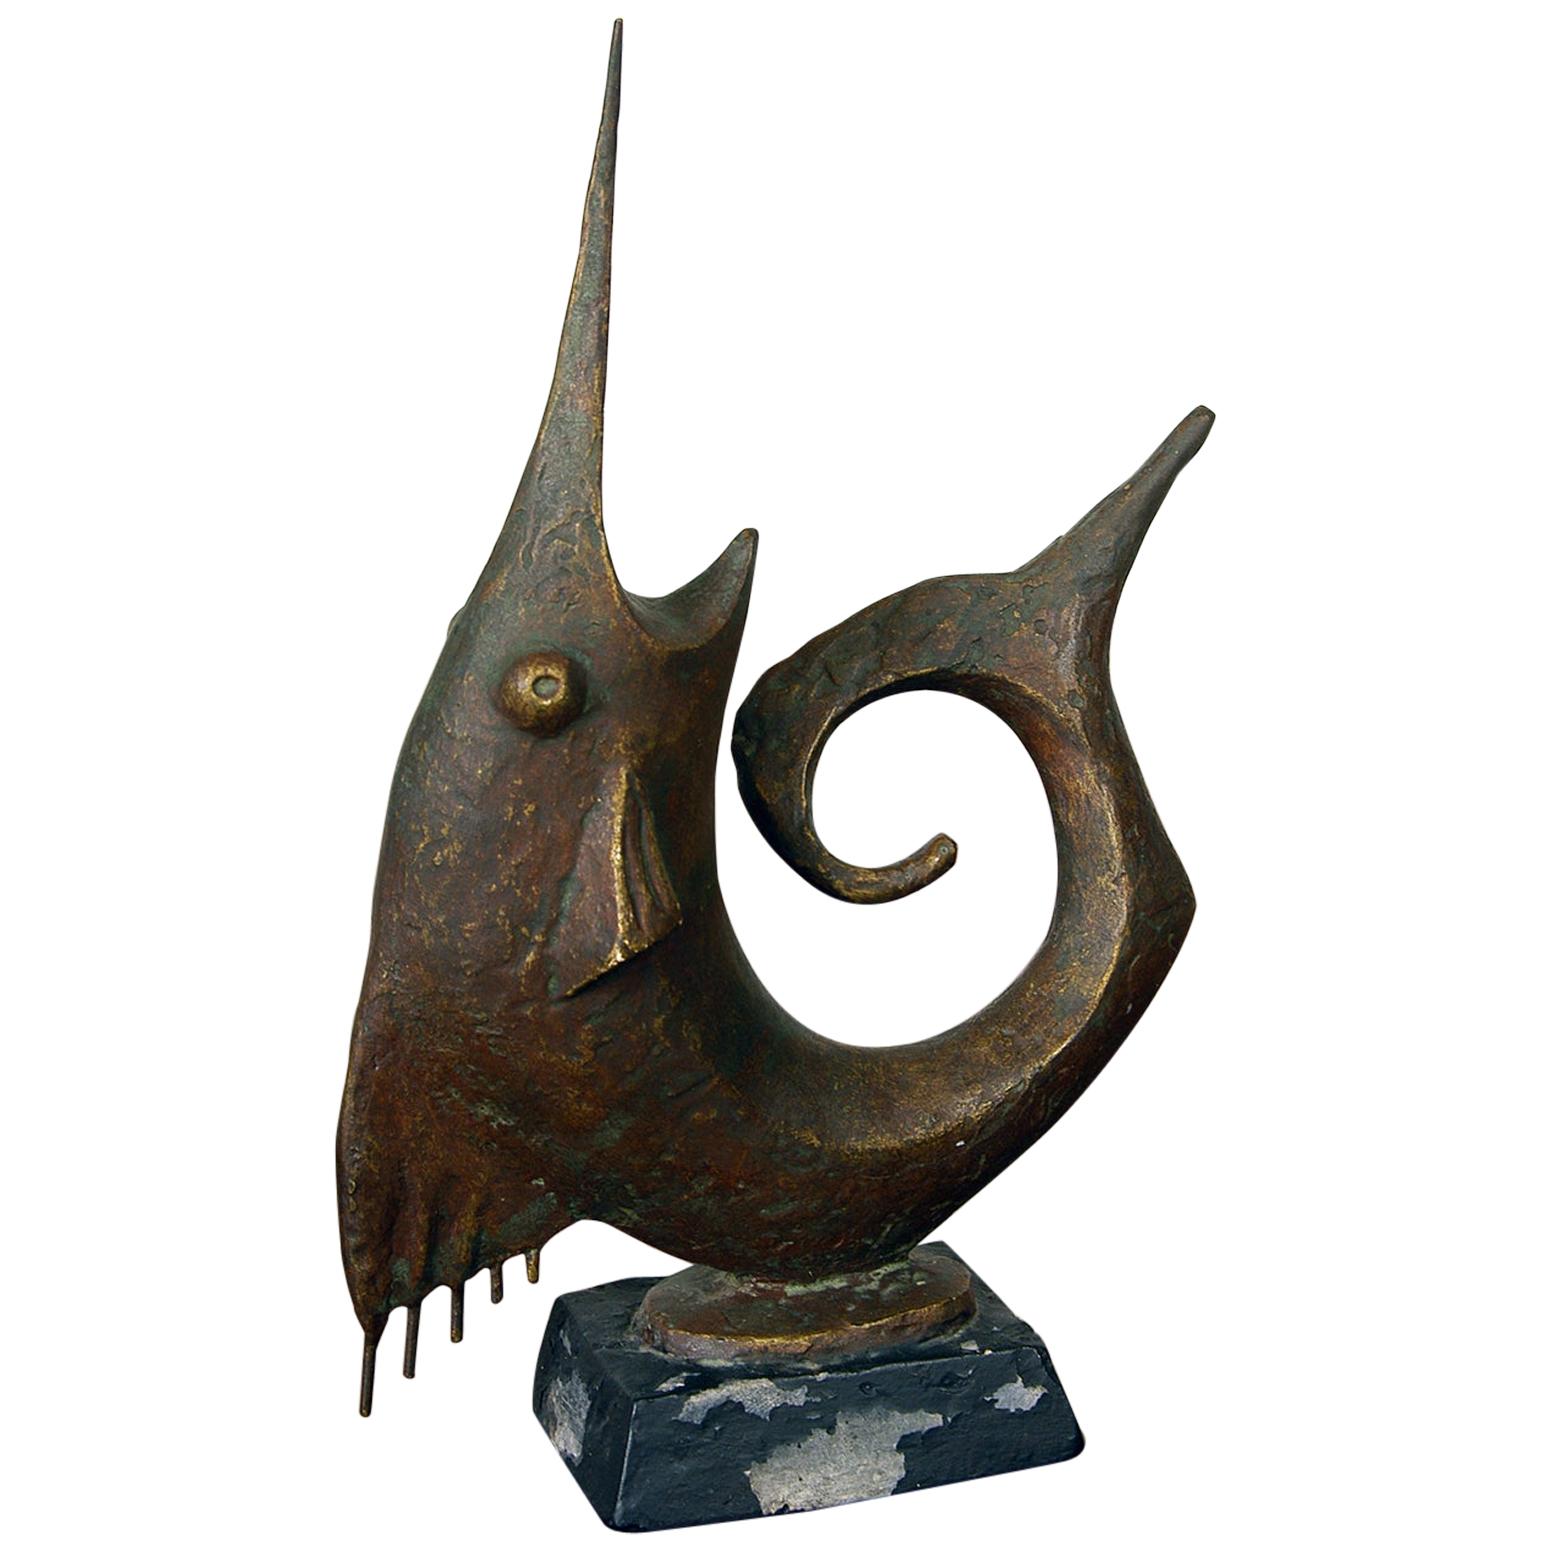 1960s Swedish Ceramic Bronze Sculpture ‘Marlin Thrusting’ by Hjalmar Ekberg